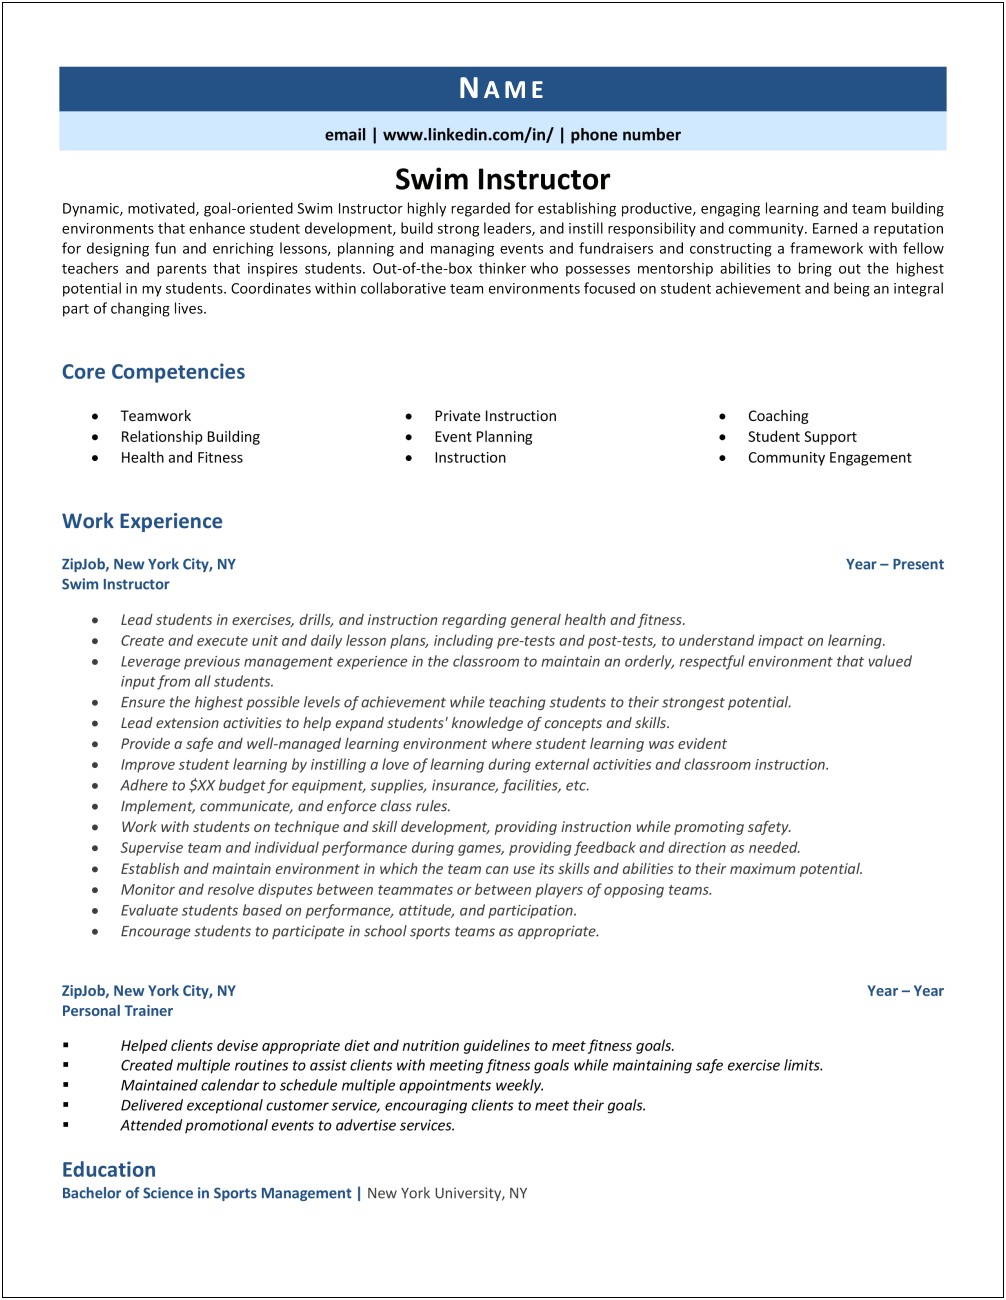 Swim Instructor Job Description For Resume